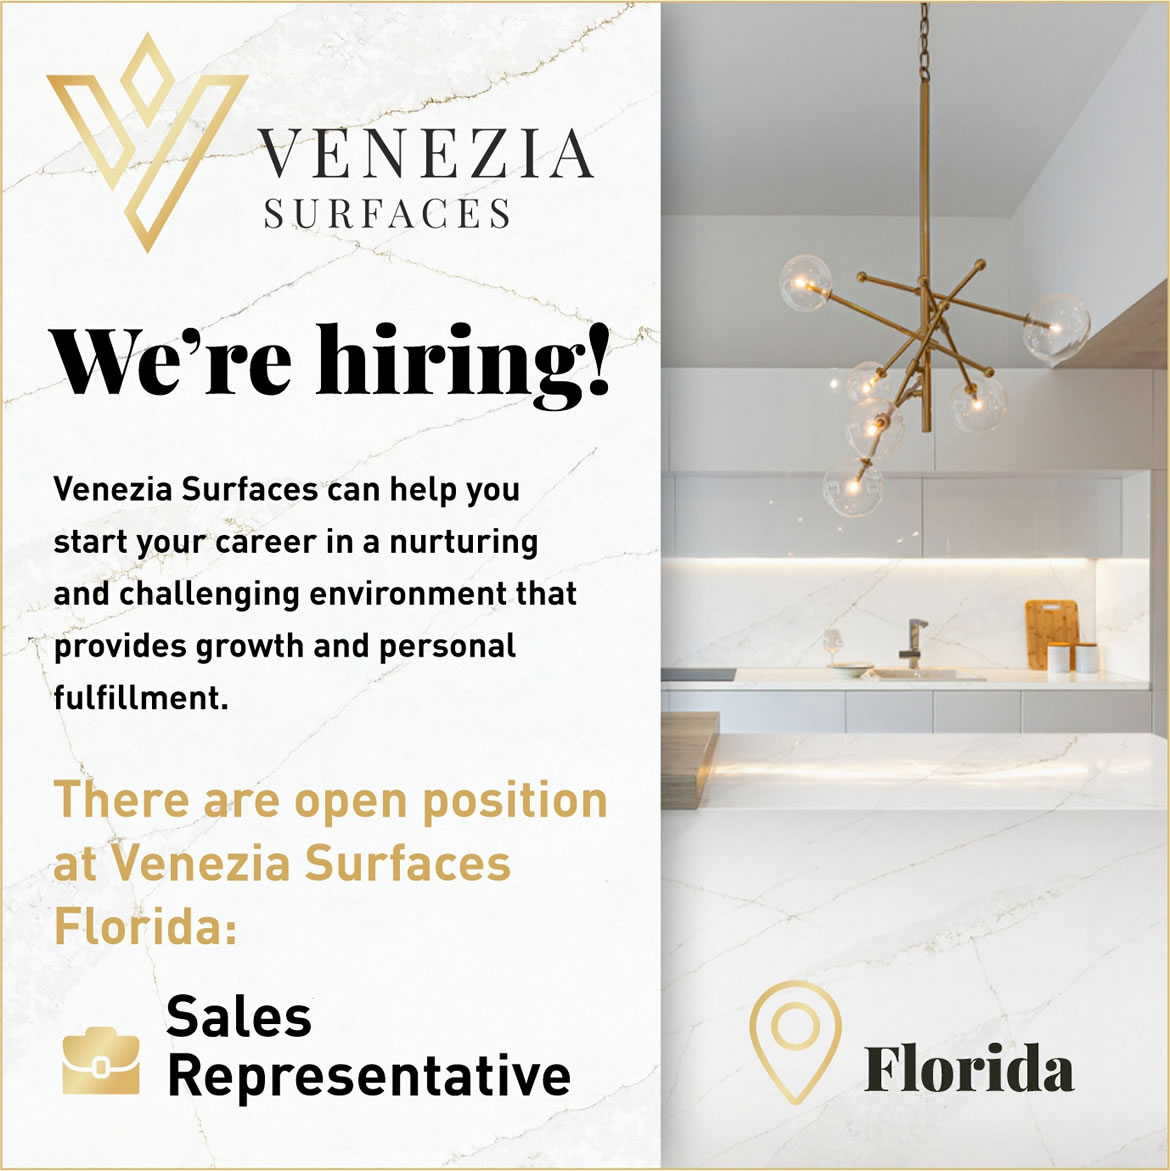 Florida! We are hiring!